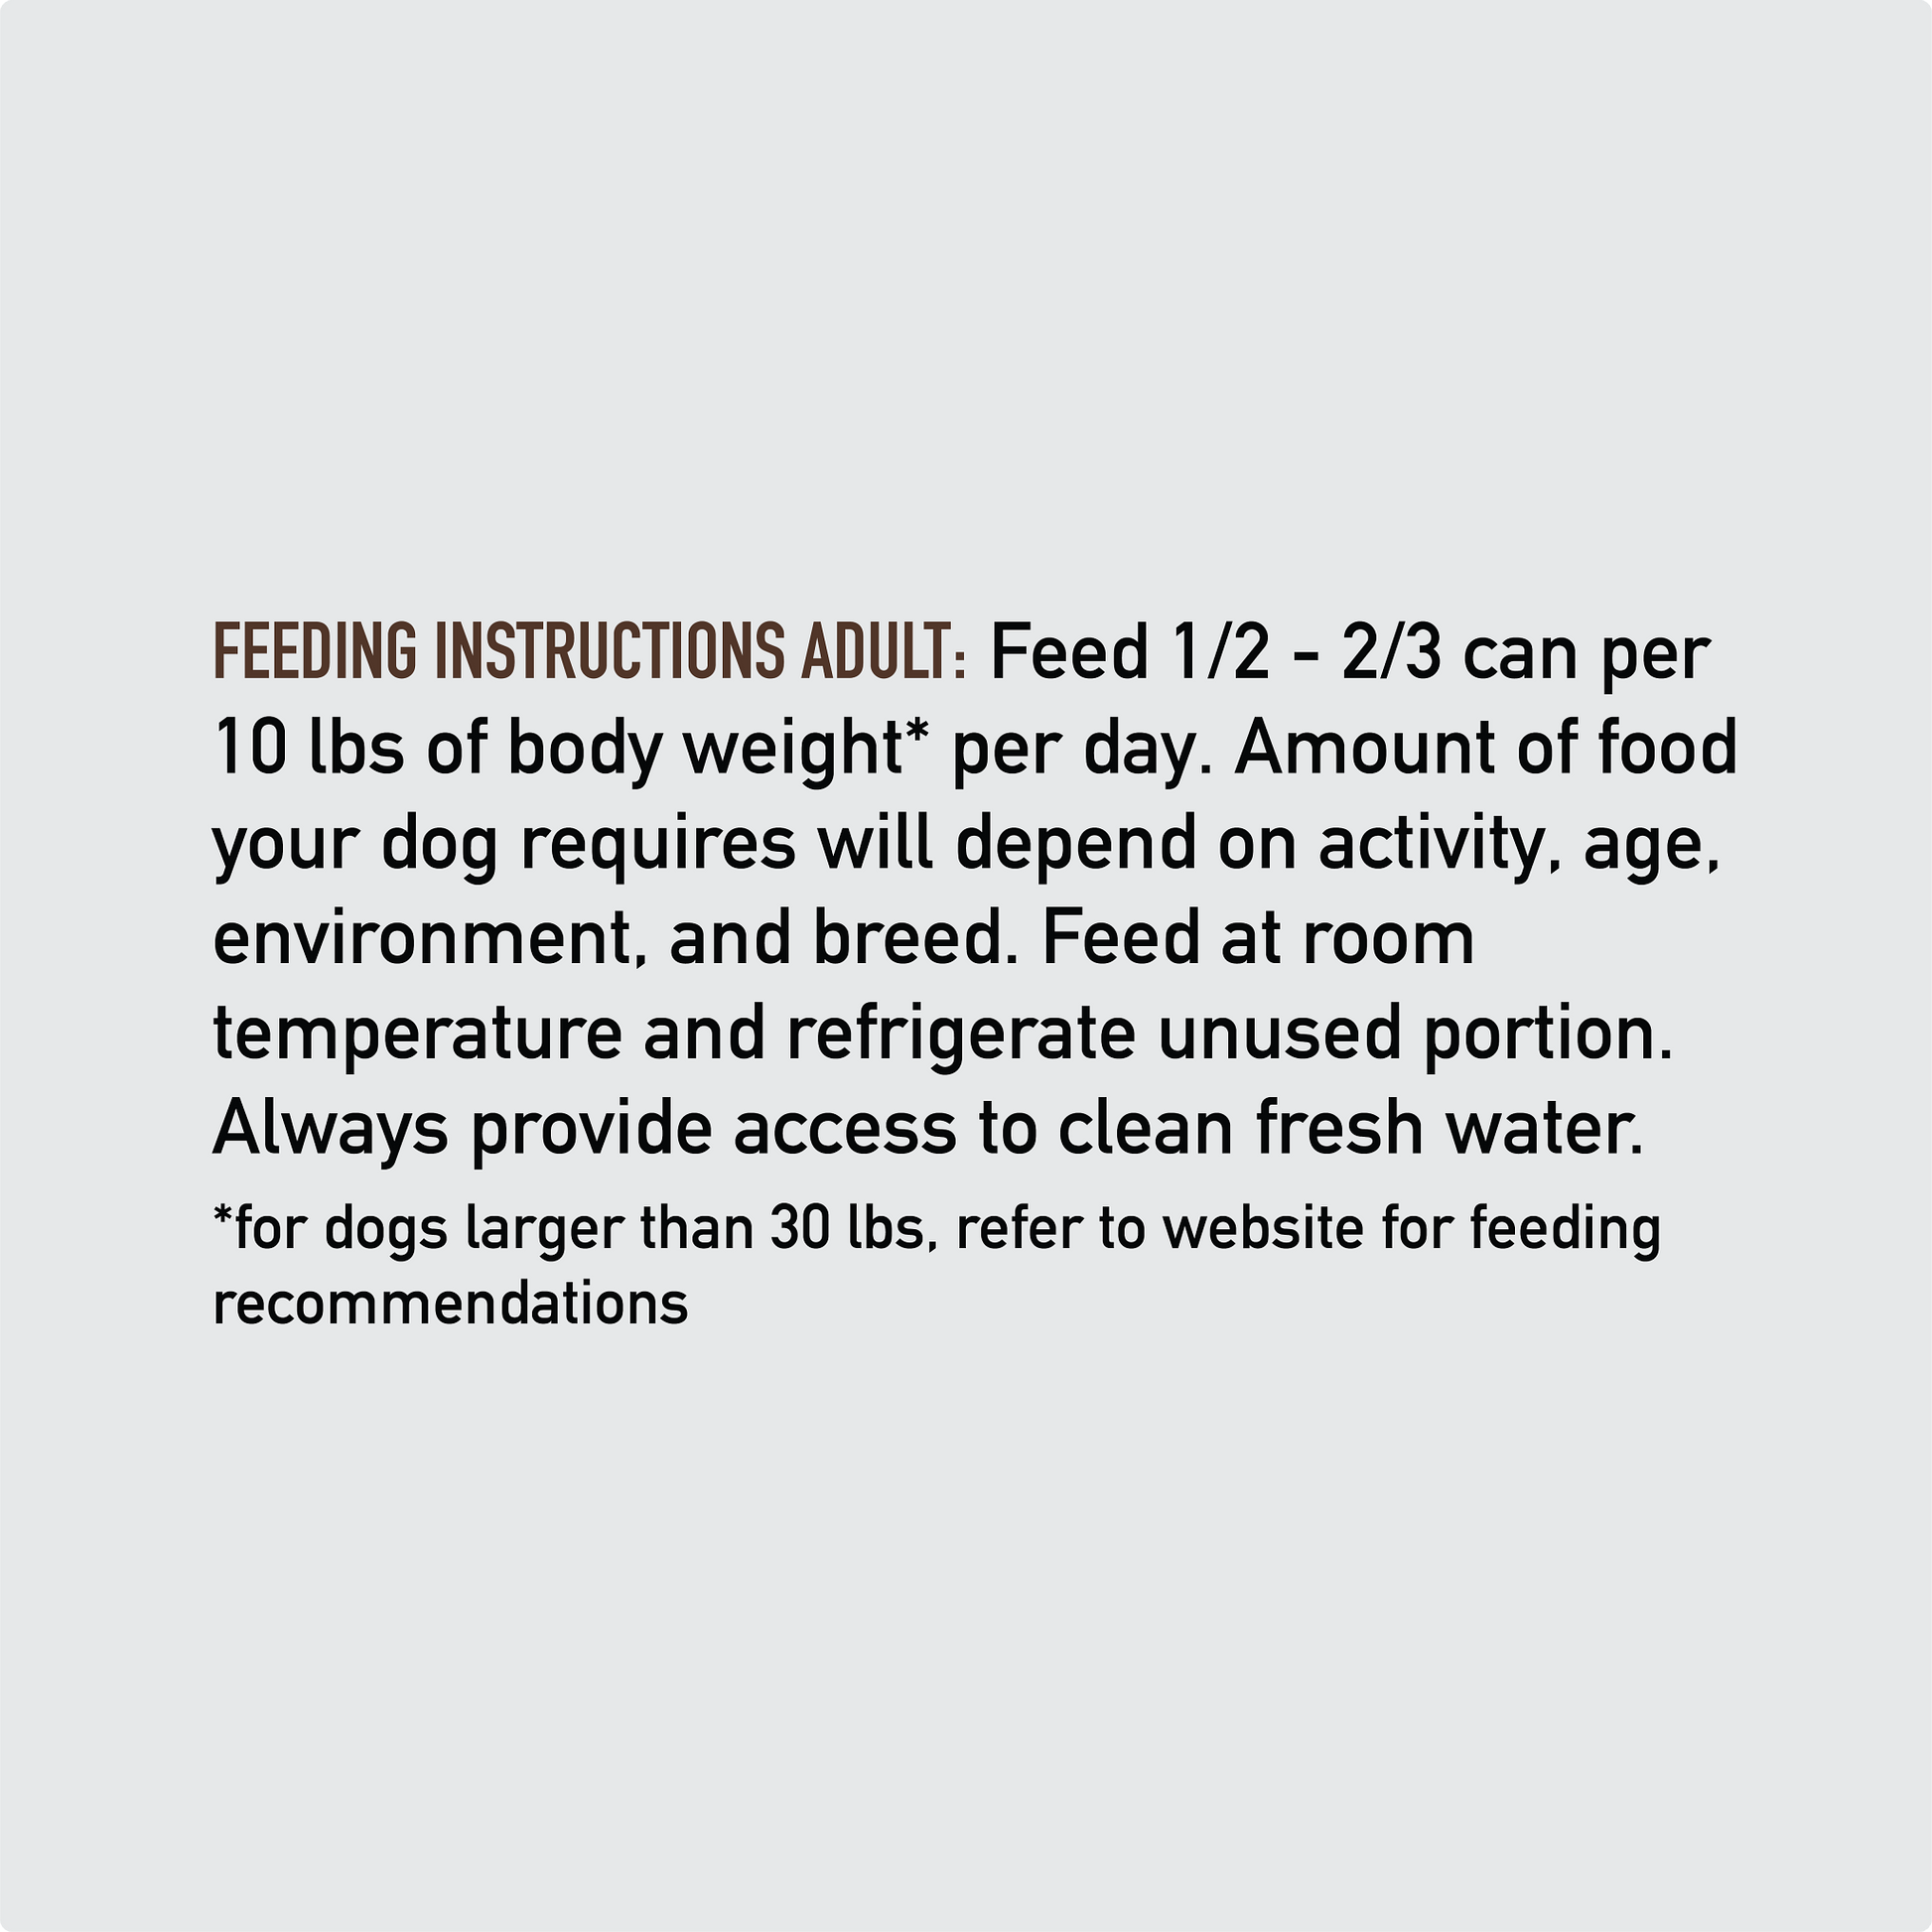 Orijen Wet Dog Regional Red Stew Recipe  Canned Dog Food  | PetMax Canada